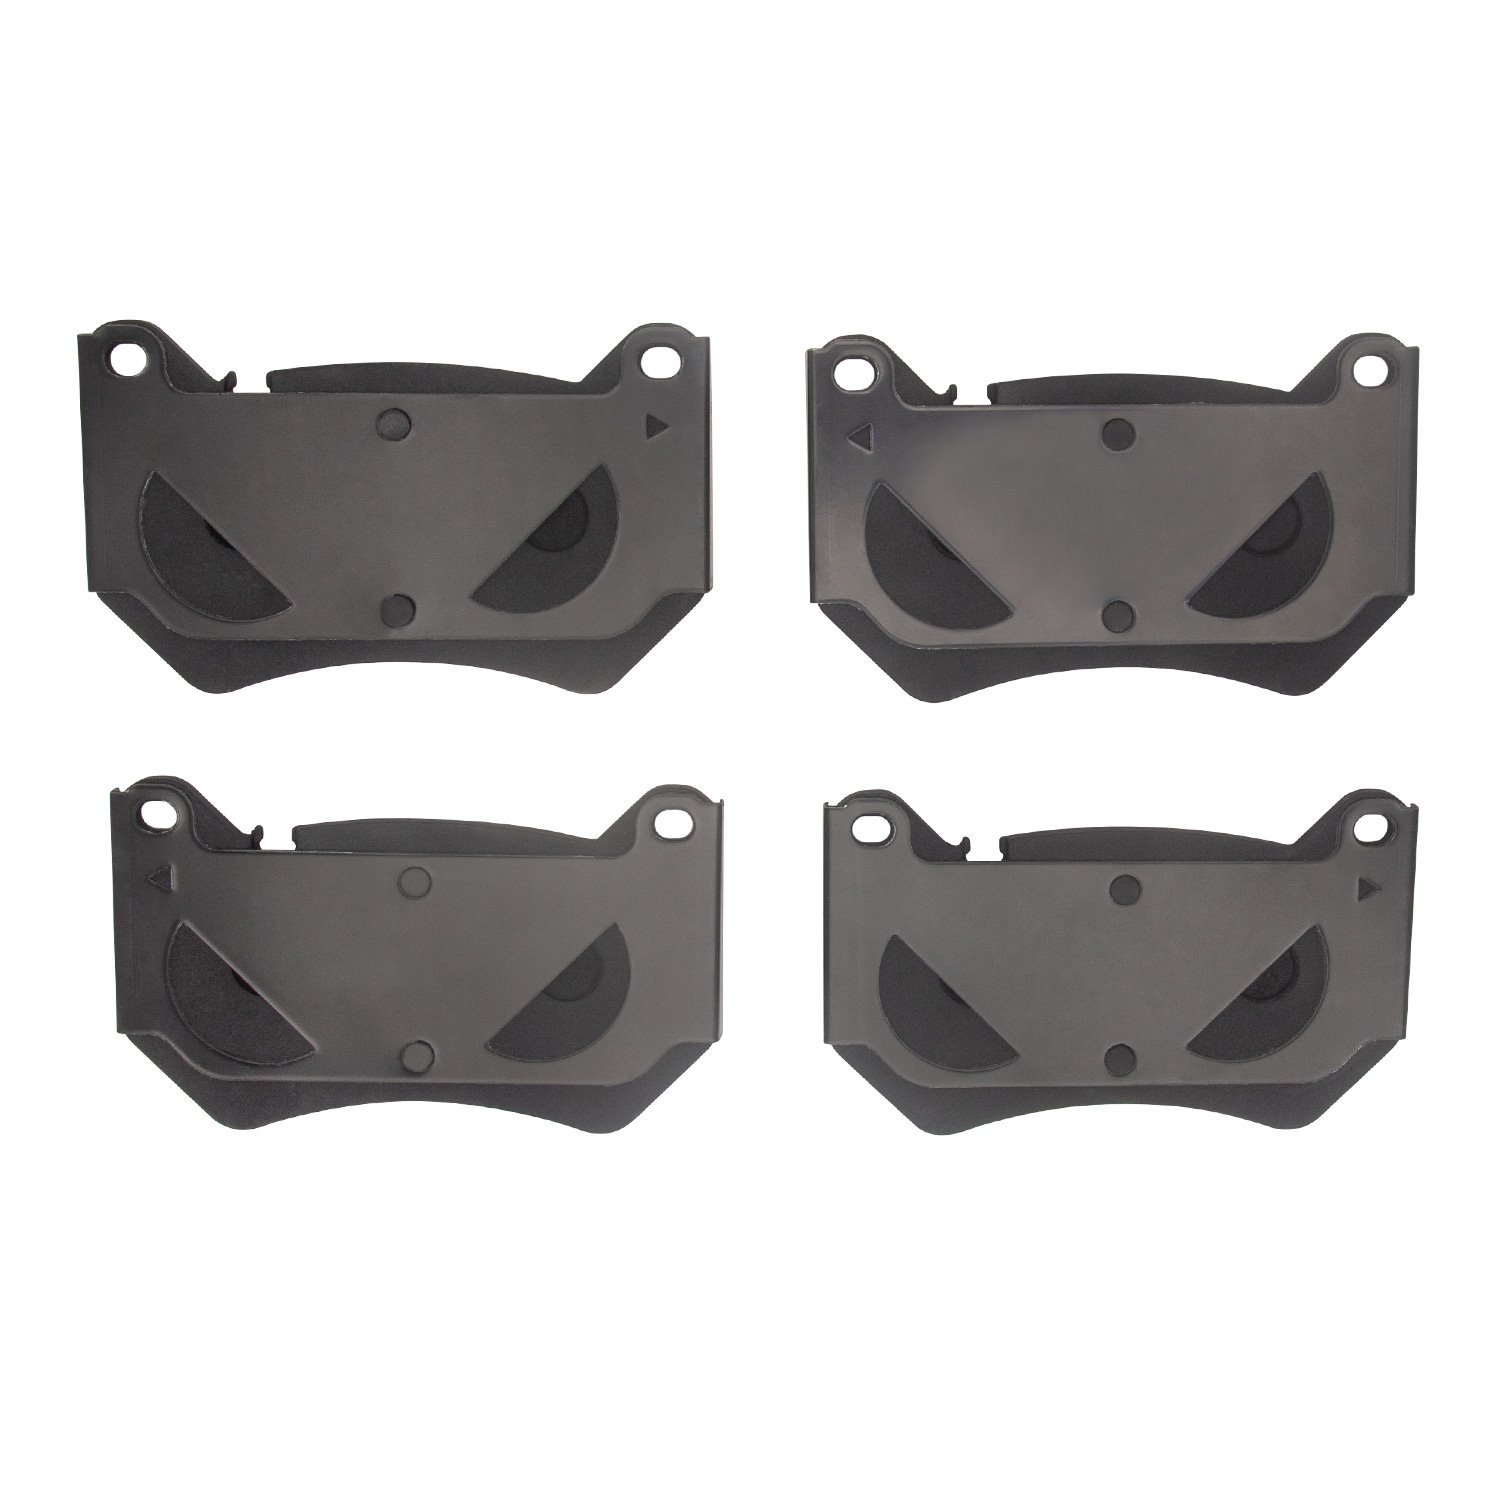 1600-2139-00 5000 Euro Ceramic Brake Pads, Fits Select Audi/Volkswagen, Position: Front